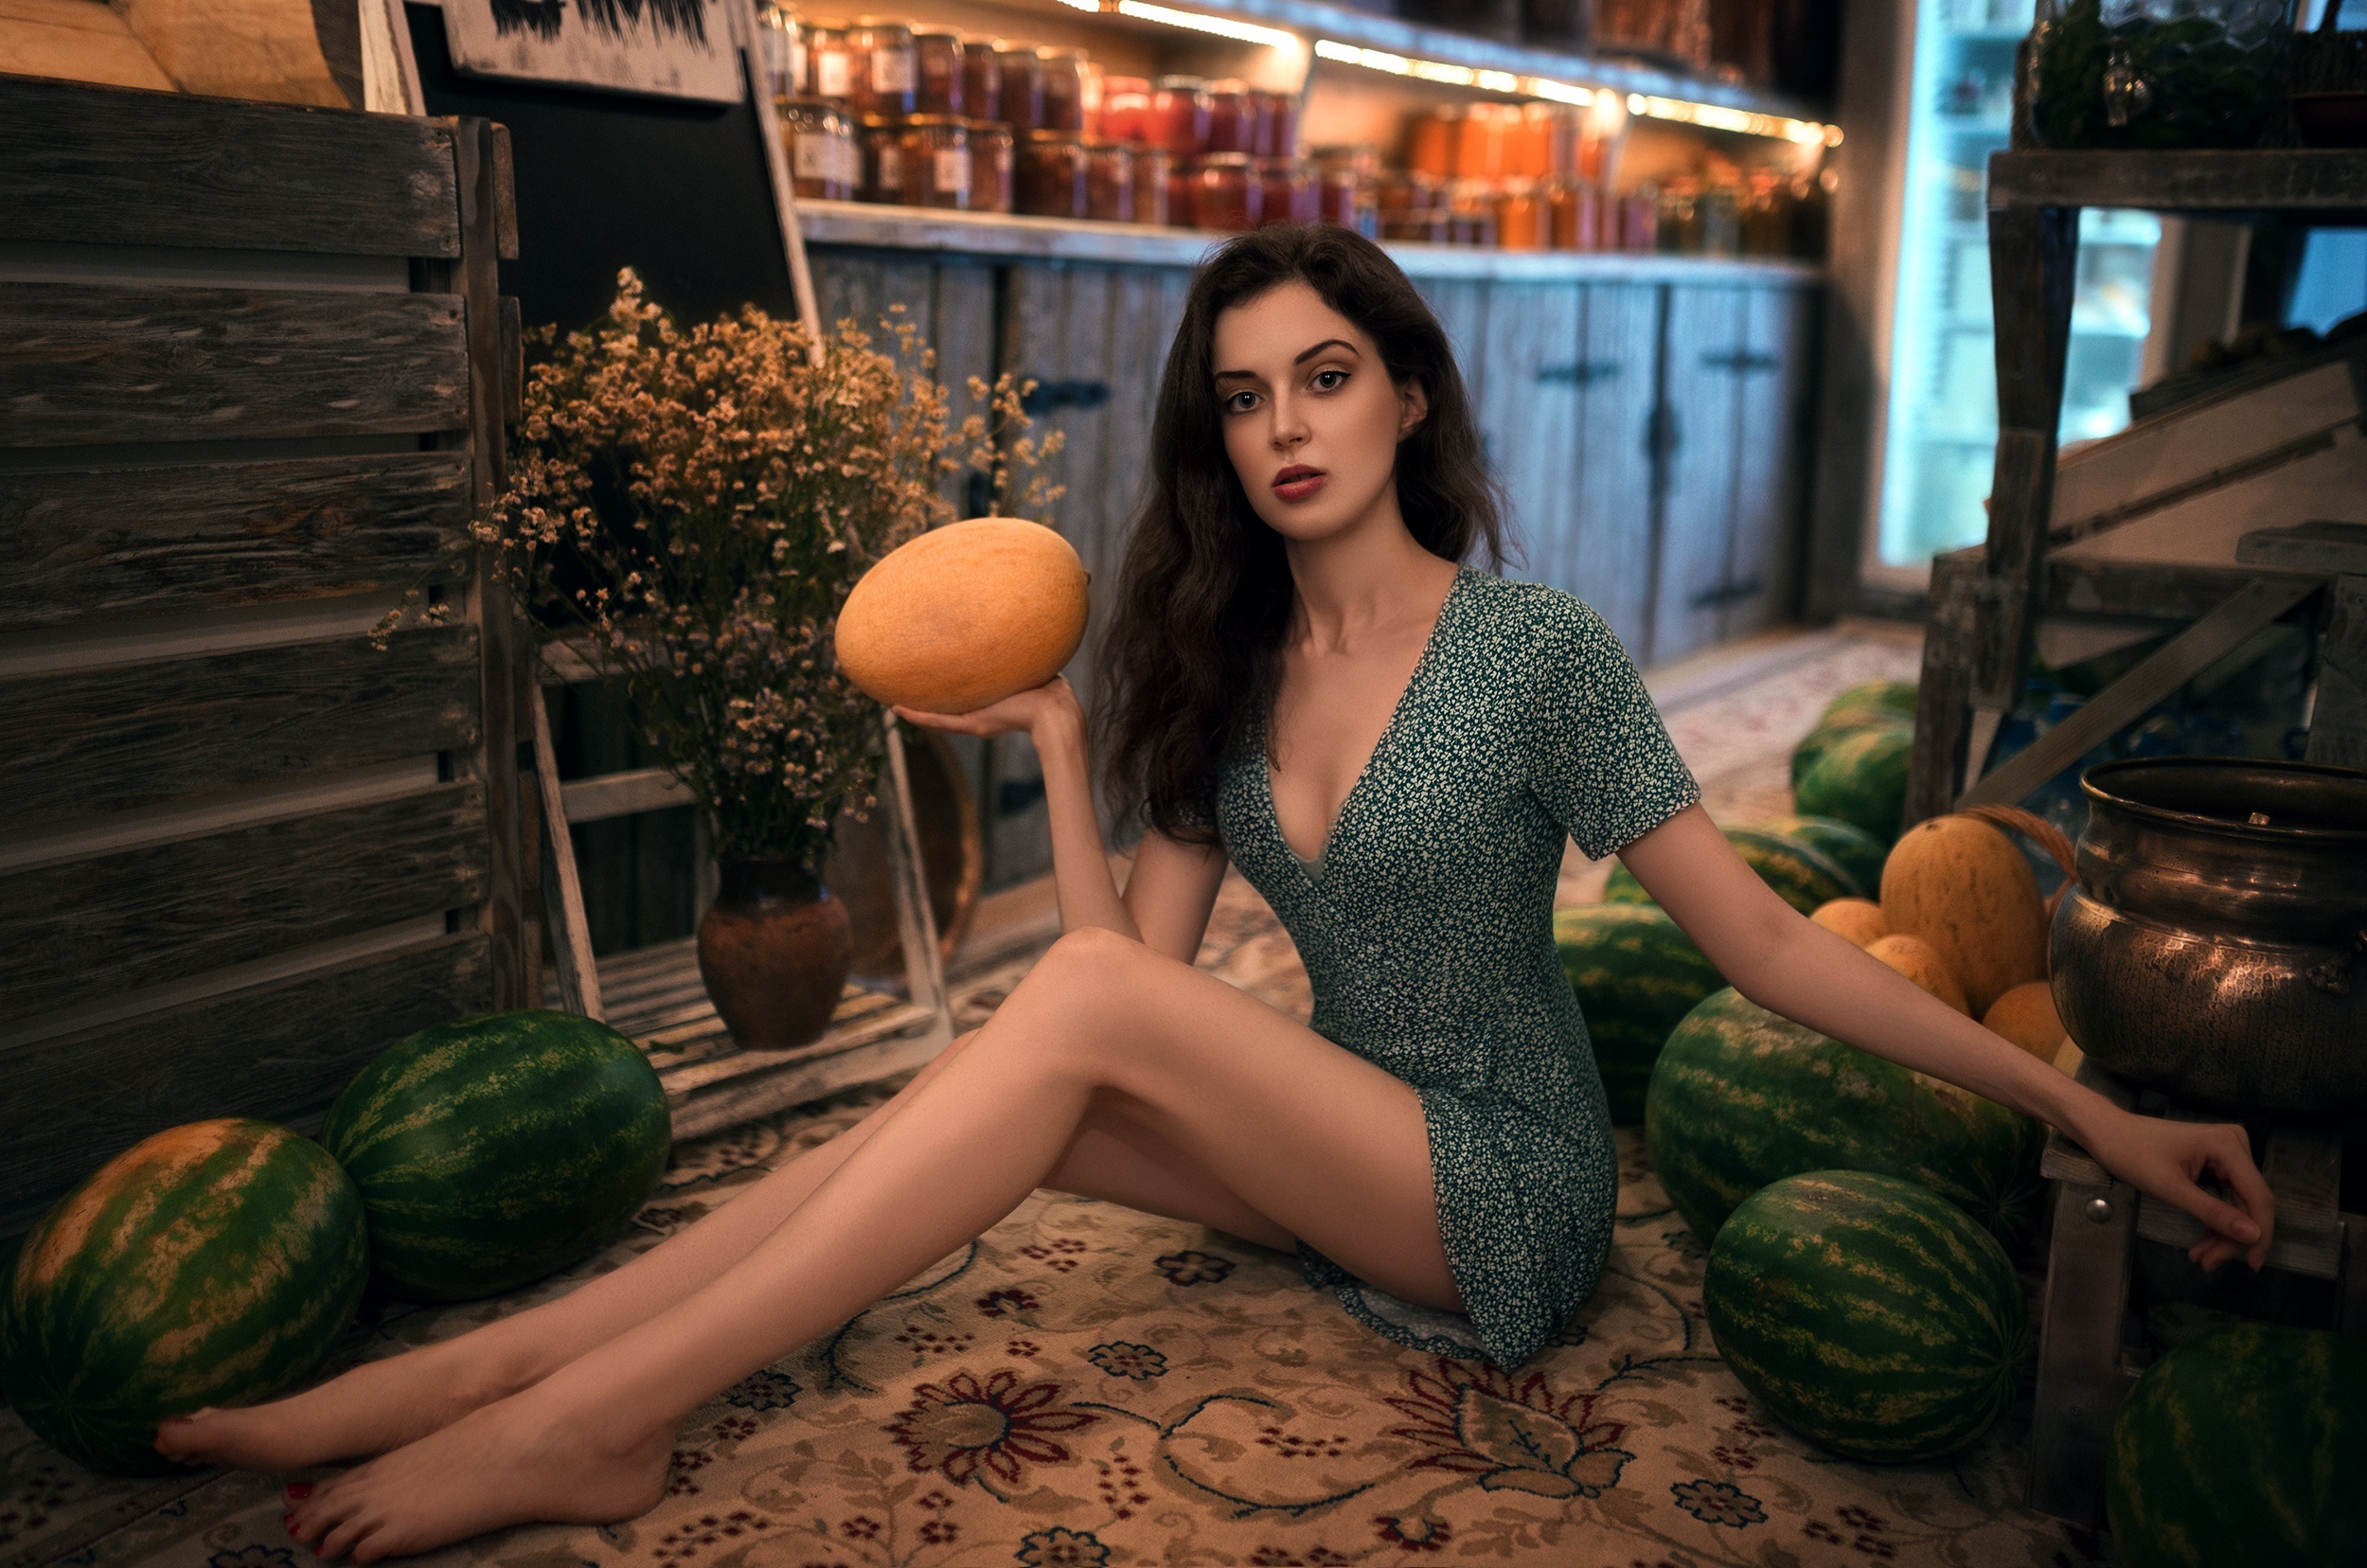 Oleg Demyanchenko Model Women Brunette Legs Feet Barefoot Dress Fruit Melons Watermelons Sitting On  2500x1656